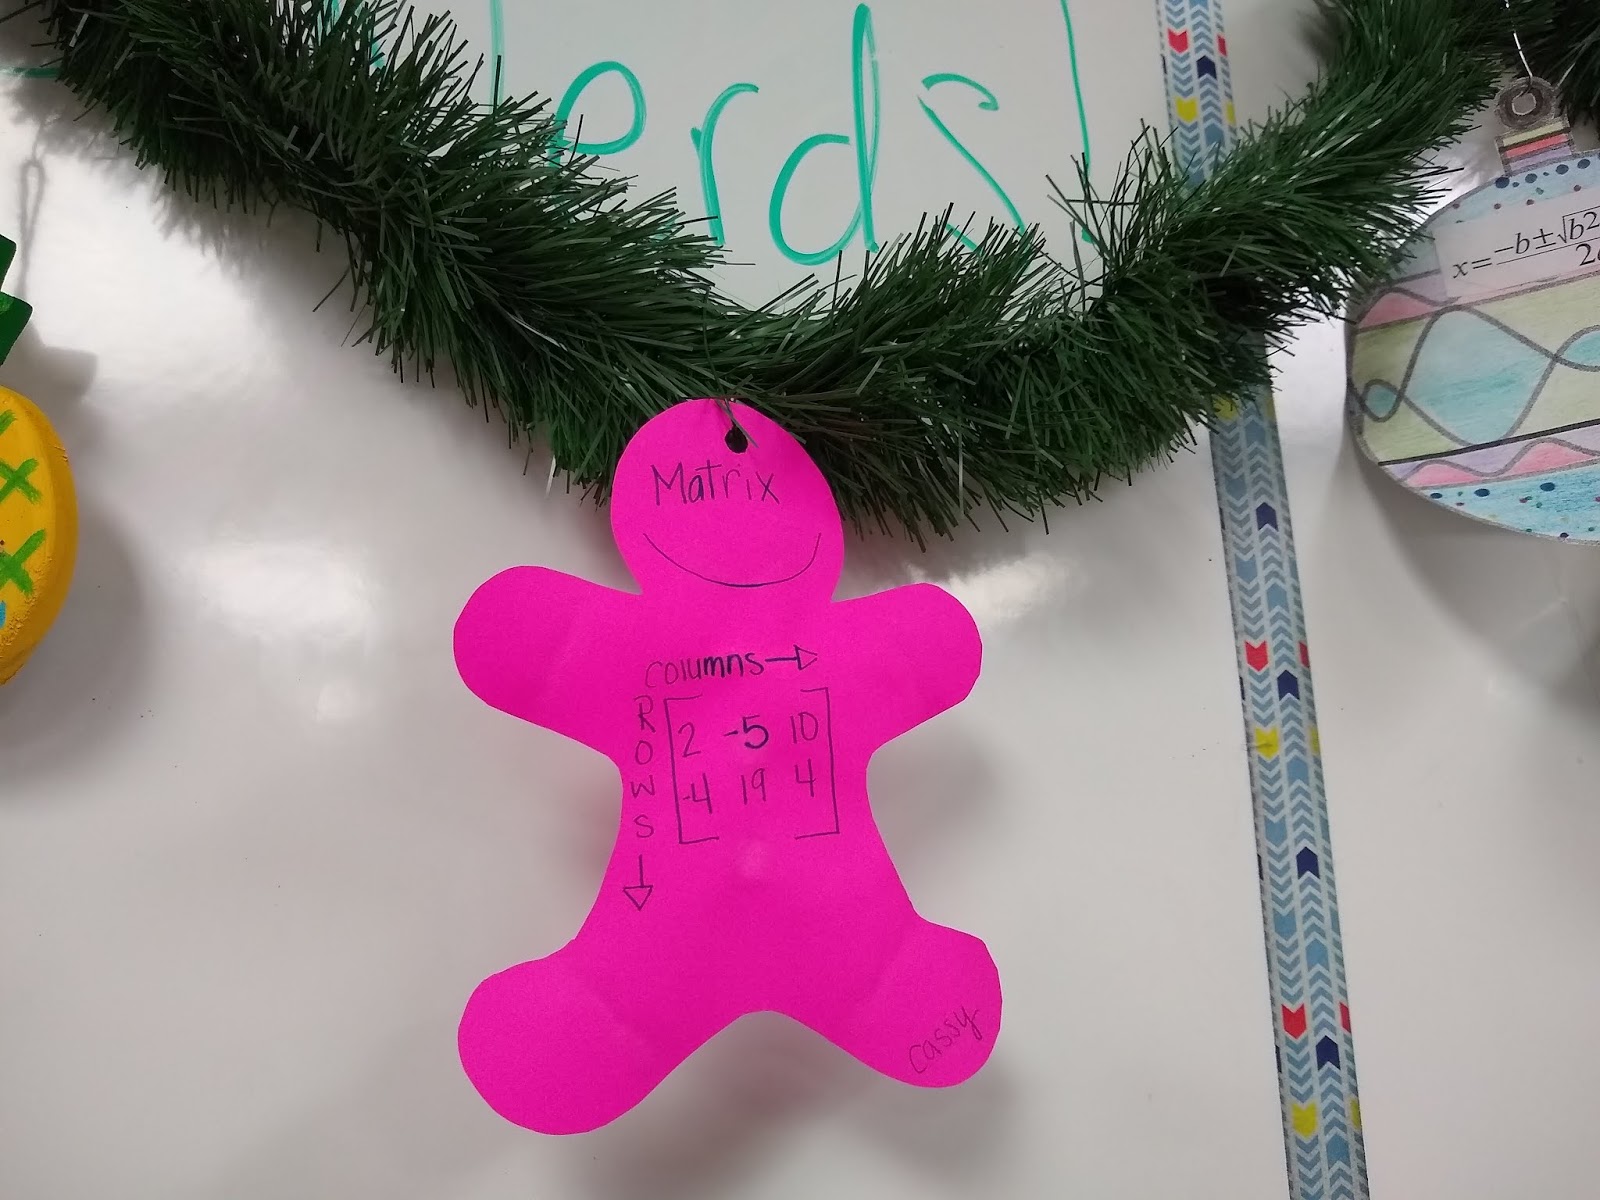 Math Vocabulary Christmas Ornament Project